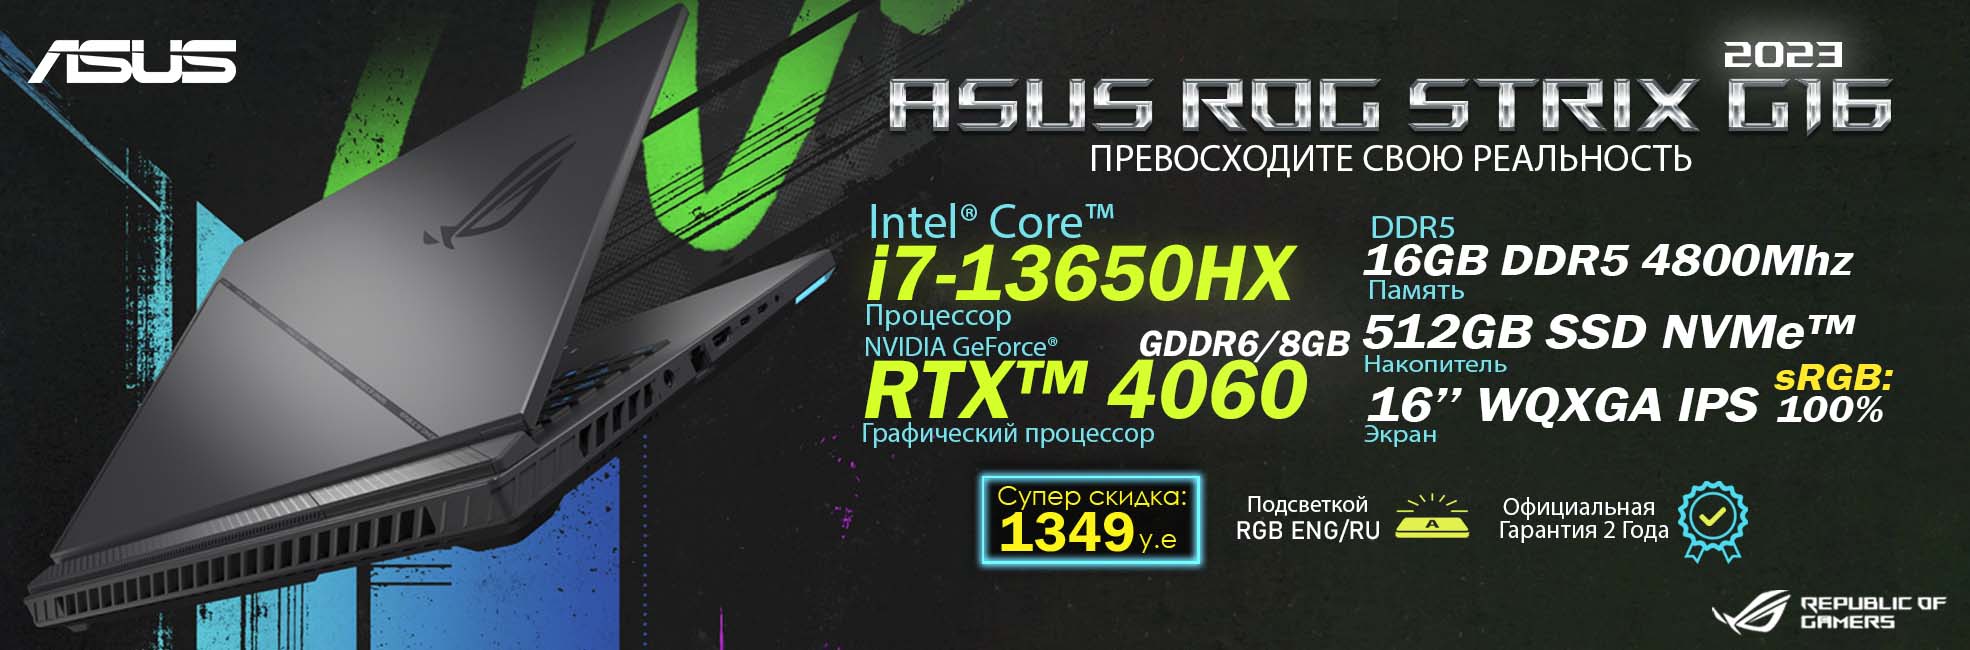 ROG G16 i7 4060 1970x650 1 Asus Rog Strix - Мощные Ноутбуки Asus RoG Strix